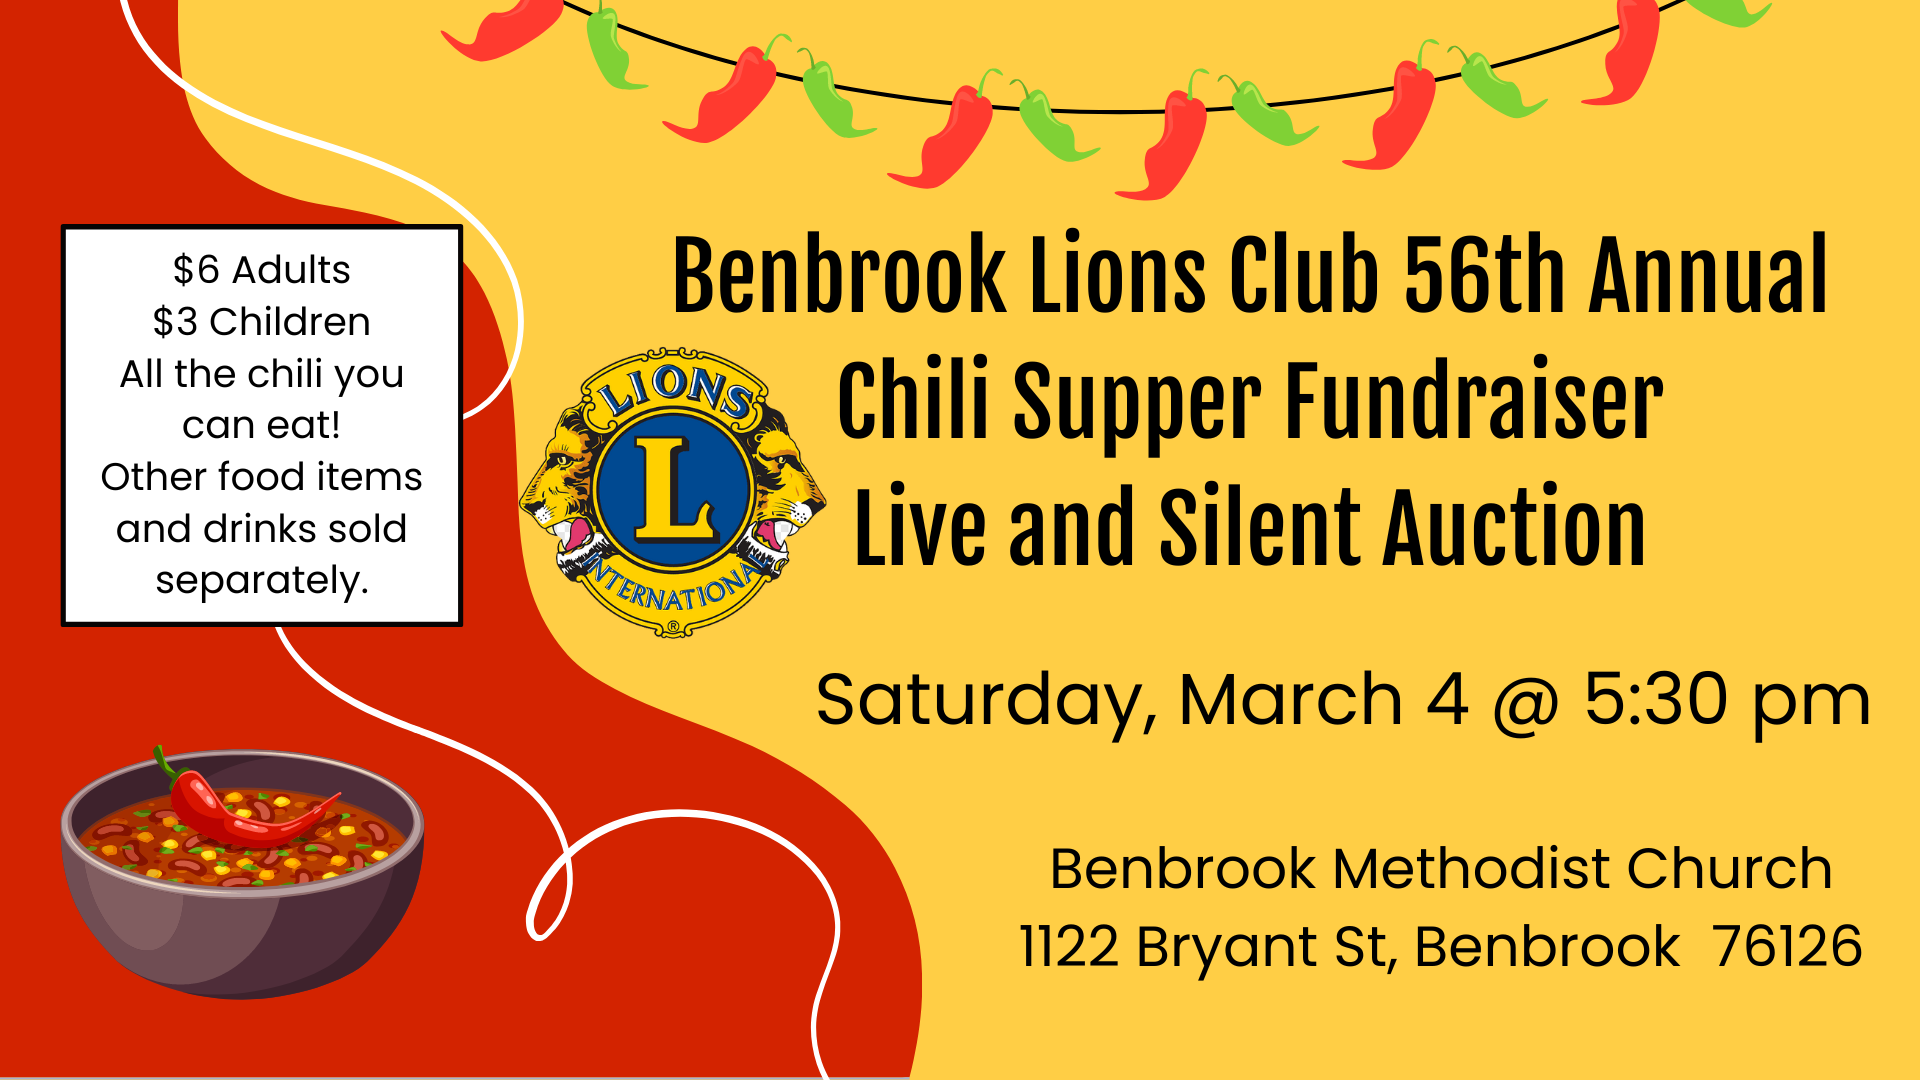 Lions club 56 annual chili supper fundraiser saturday march 4 at 5:30pm